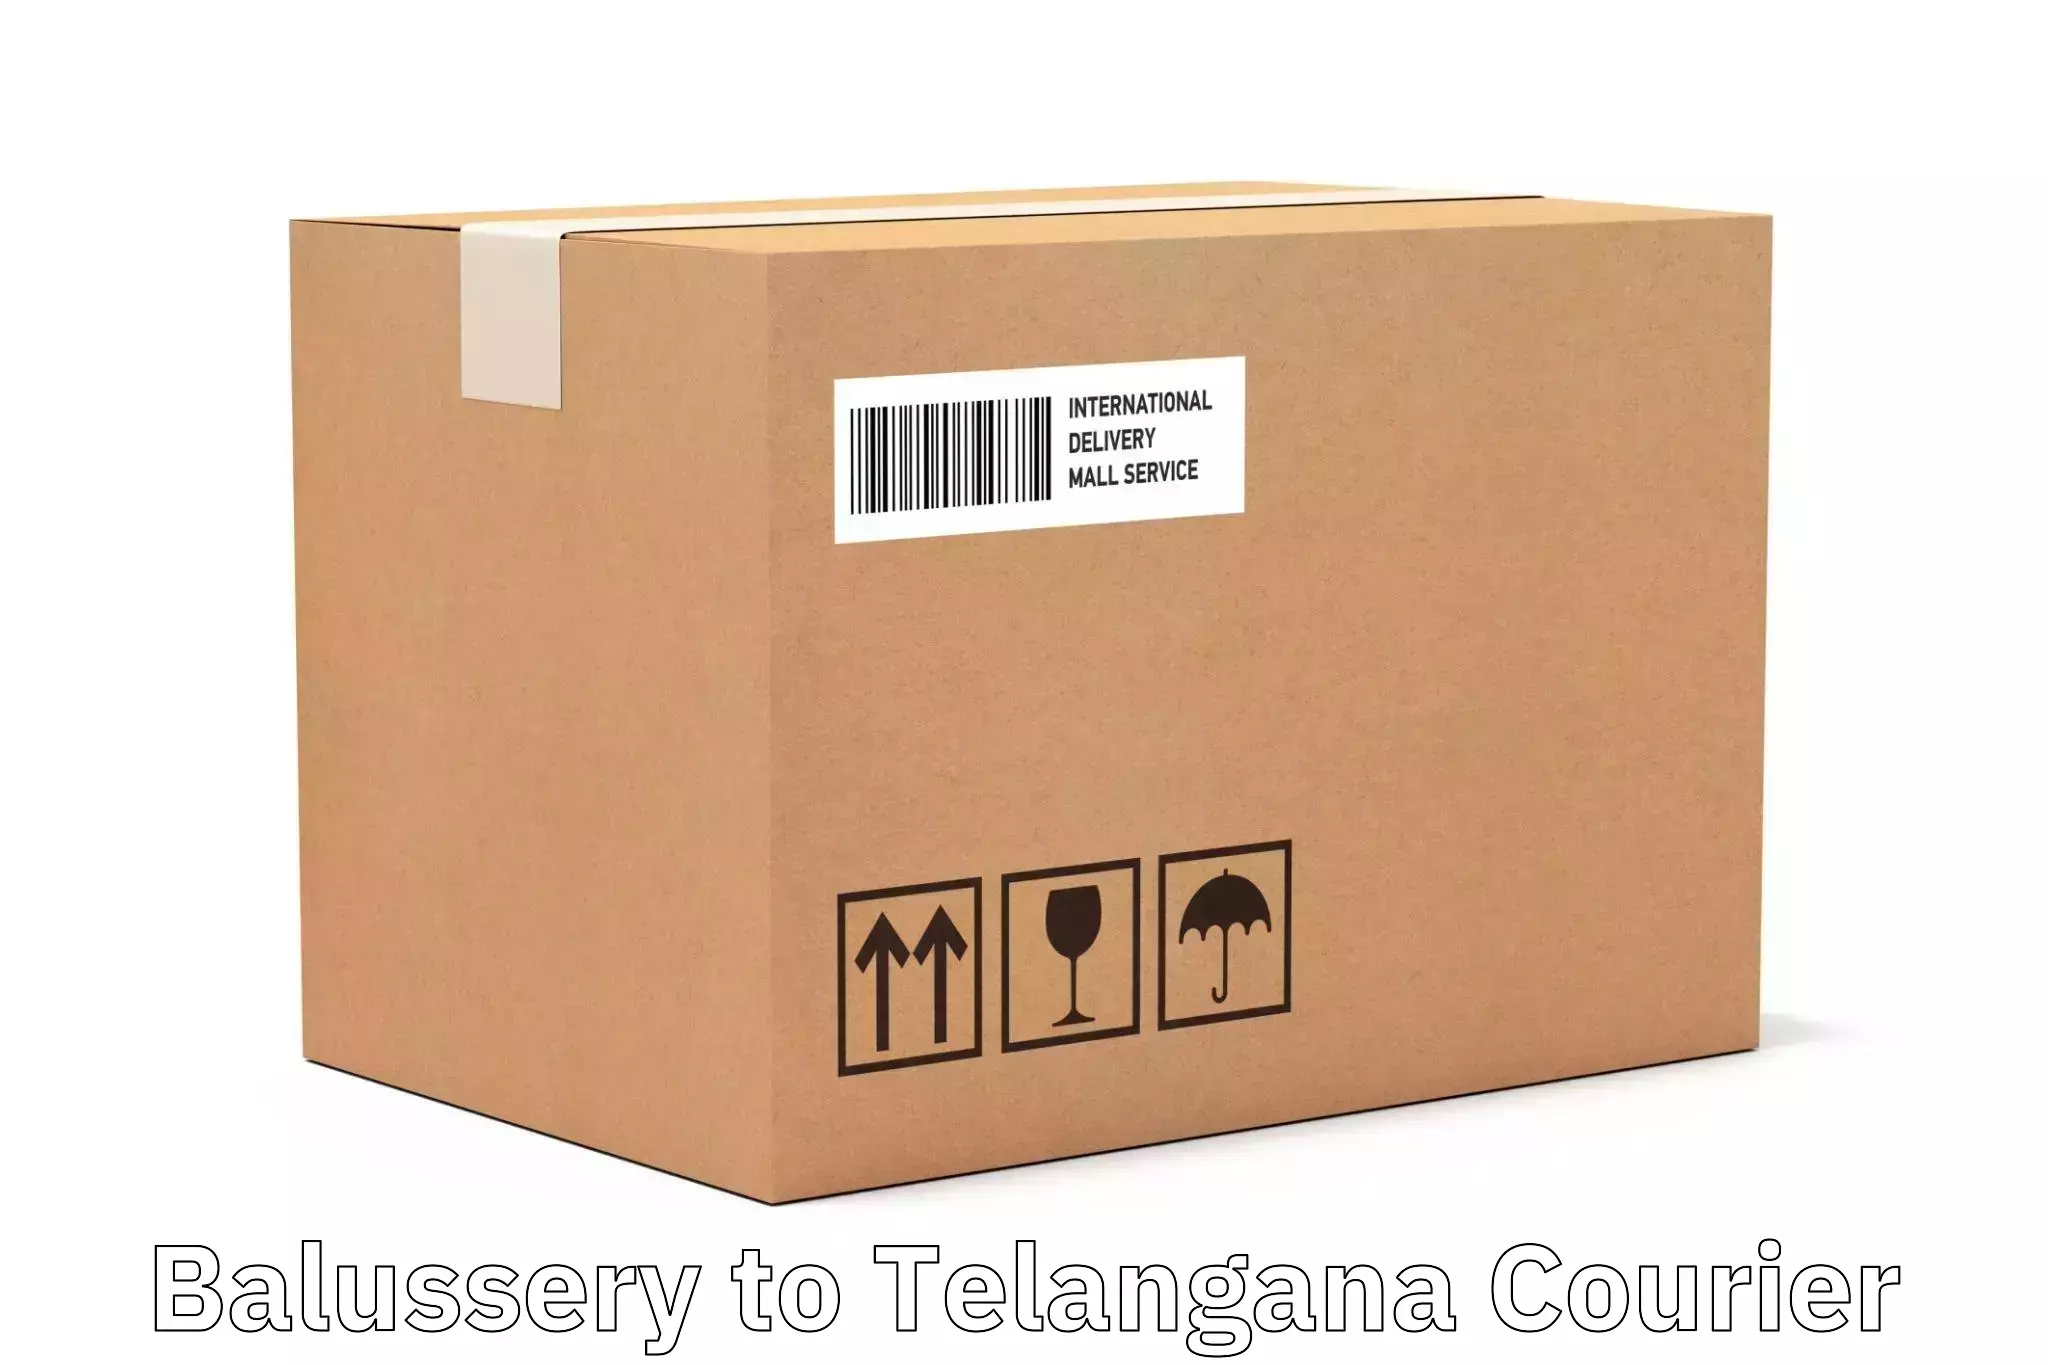 Business shipping needs Balussery to Telangana